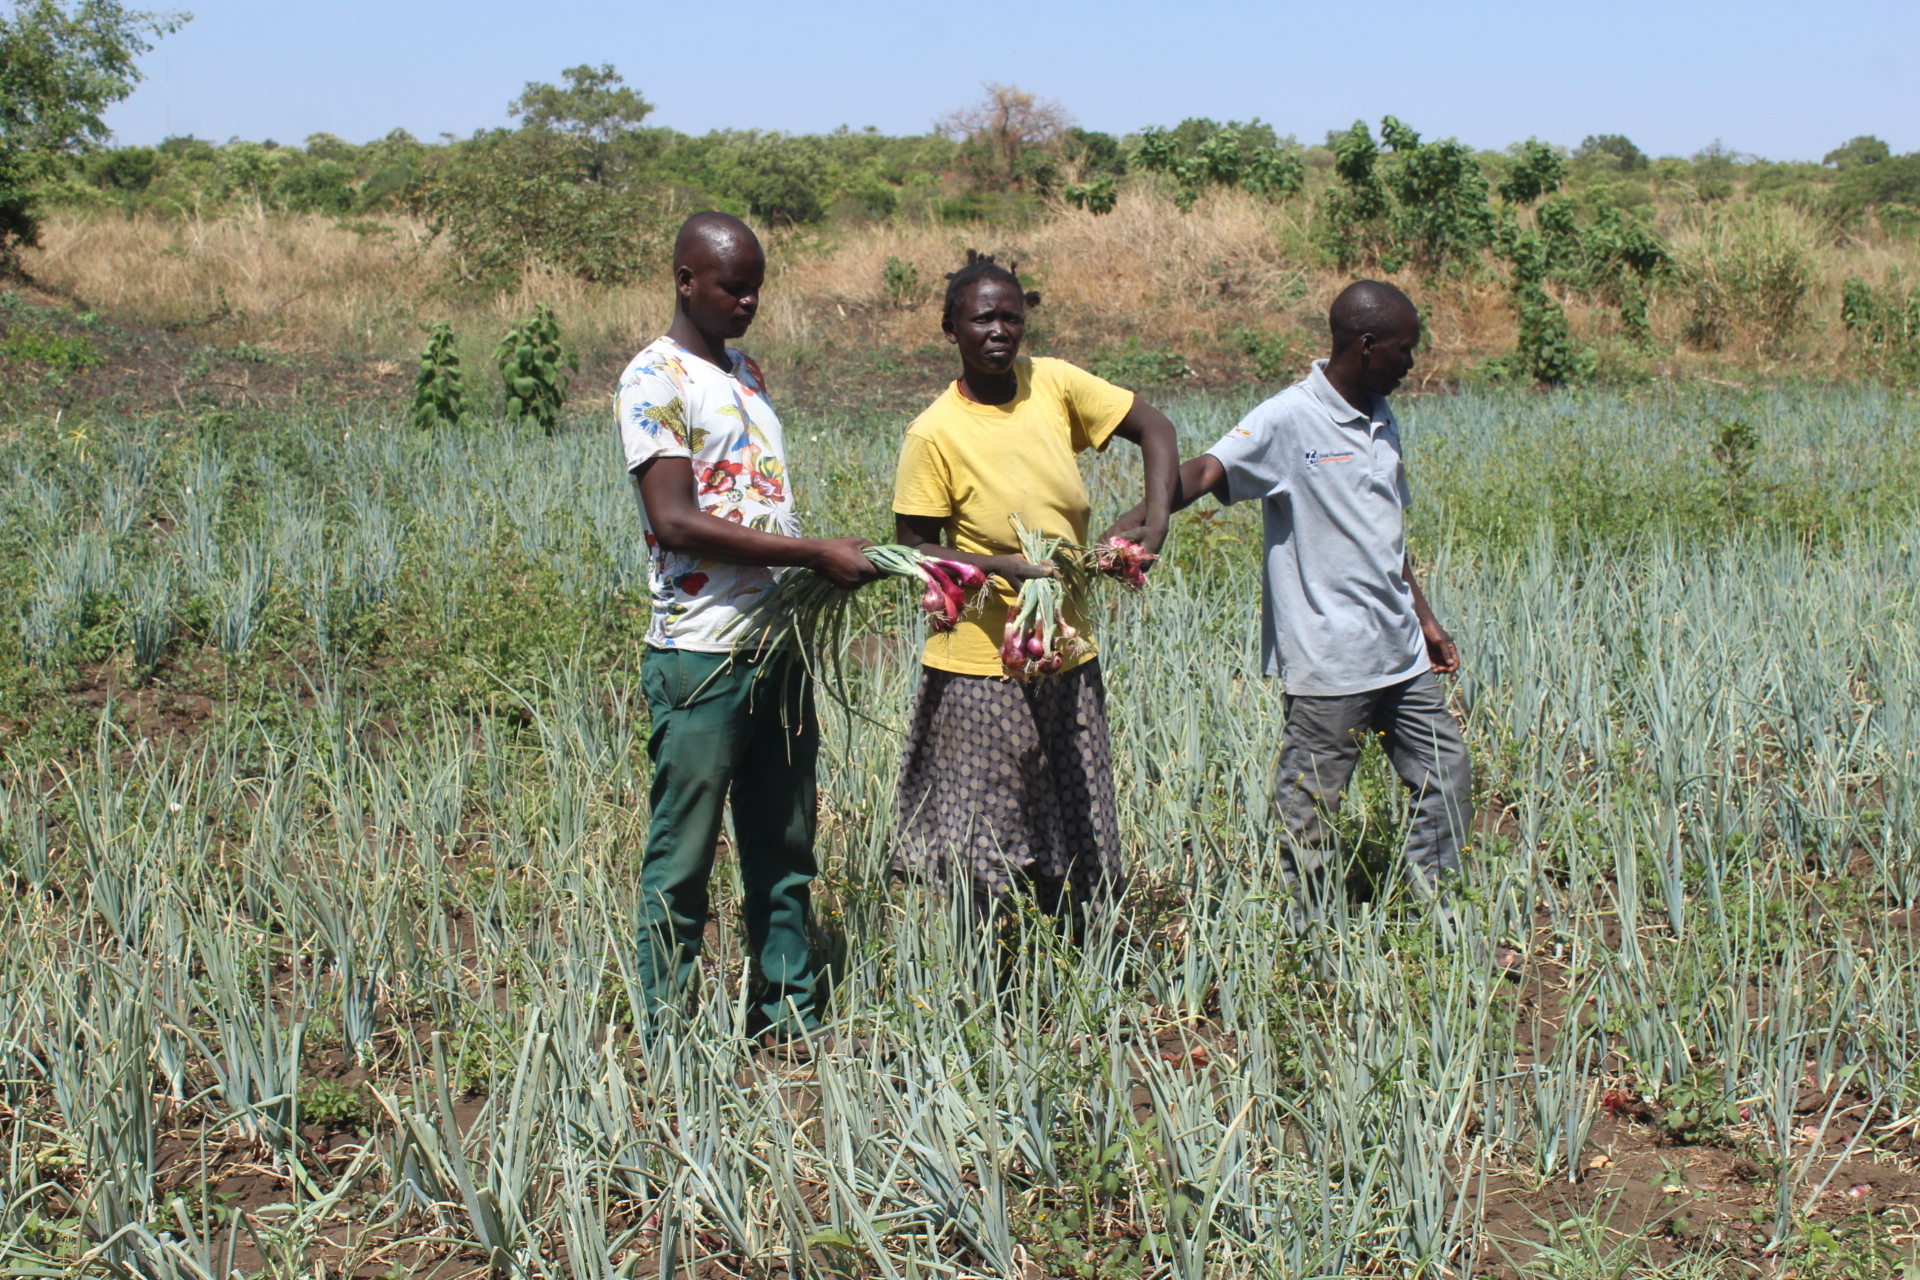 Diyok group members harvesting their onion. Credit: FAO/ECO Uganda